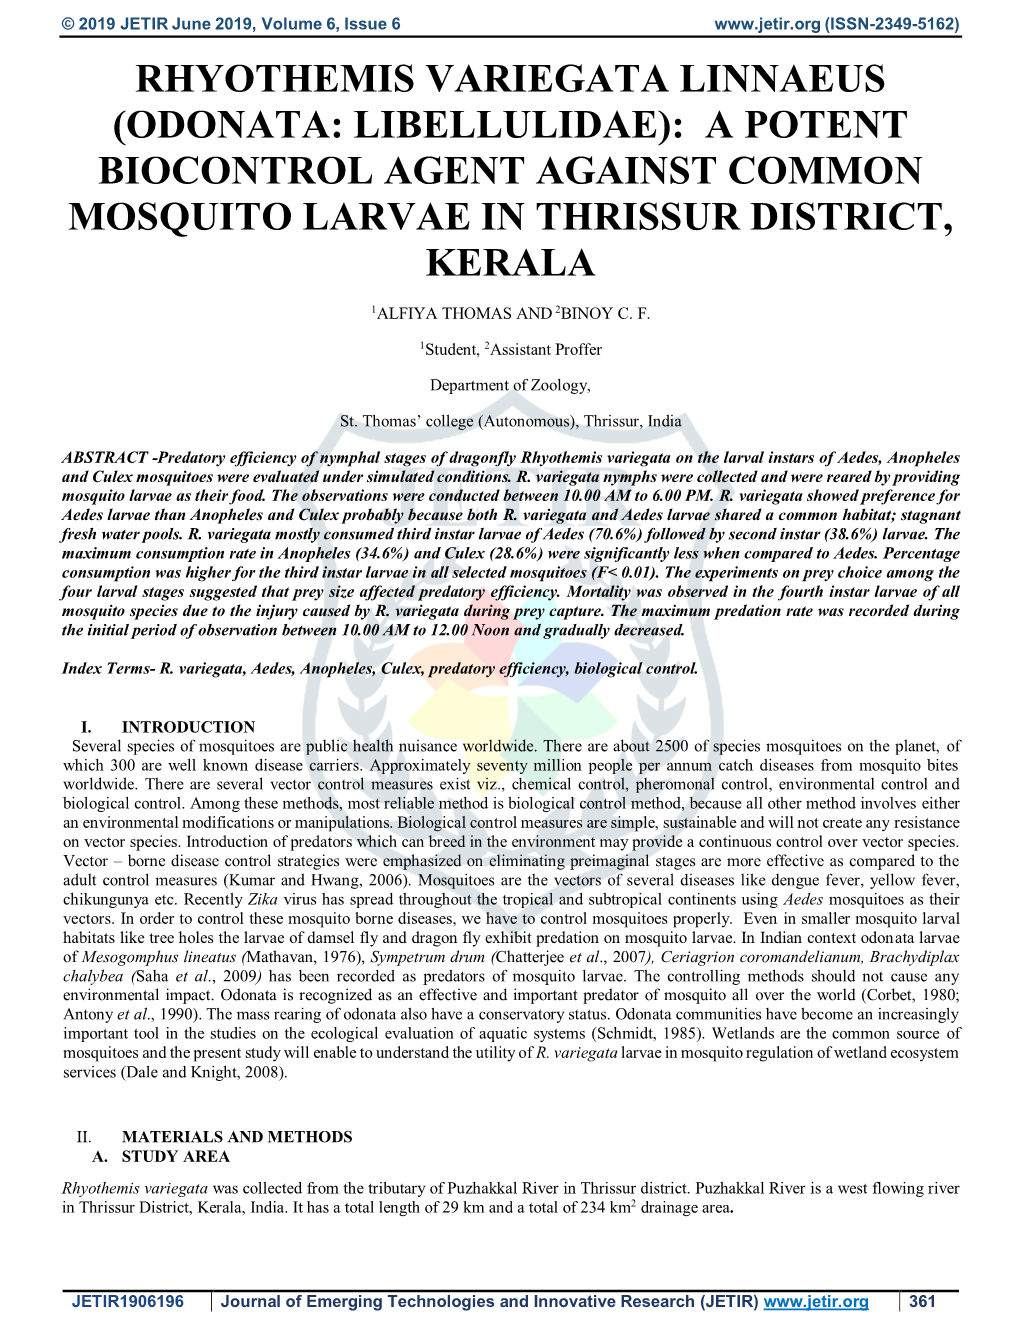 Rhyothemis Variegata Linnaeus (Odonata: Libellulidae): a Potent Biocontrol Agent Against Common Mosquito Larvae in Thrissur District, Kerala